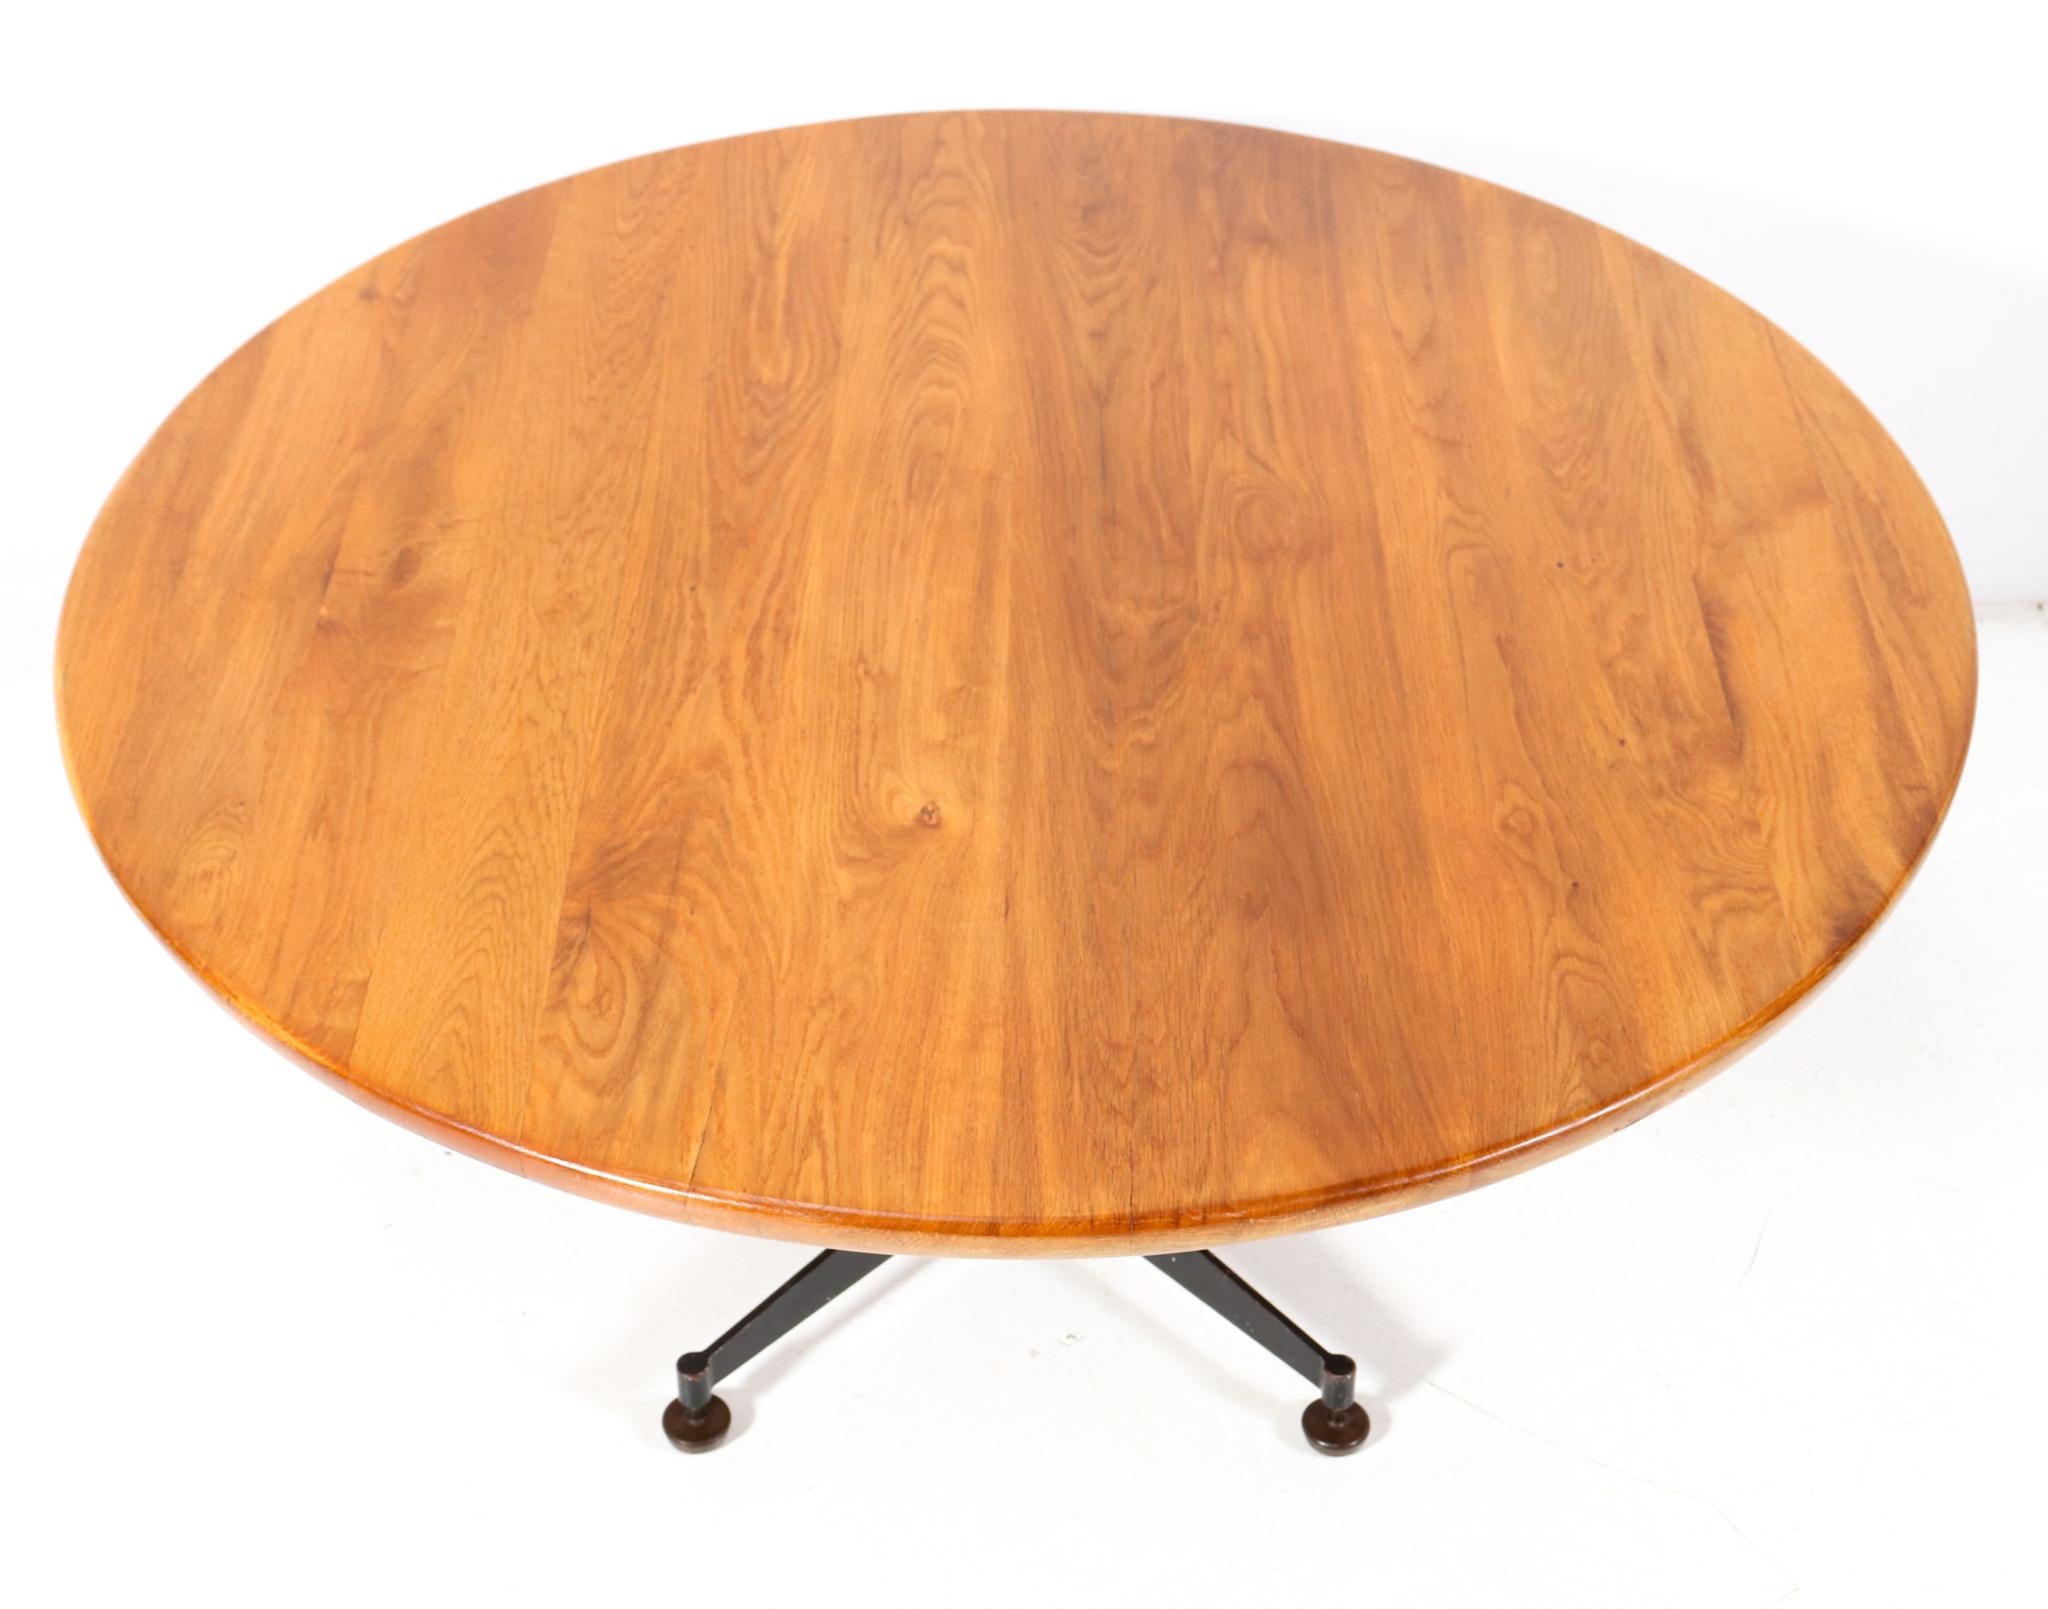 Mid-20th Century Oak Mid-Century Modern Round Dining Room Table by Architect Bart van Kasteel For Sale